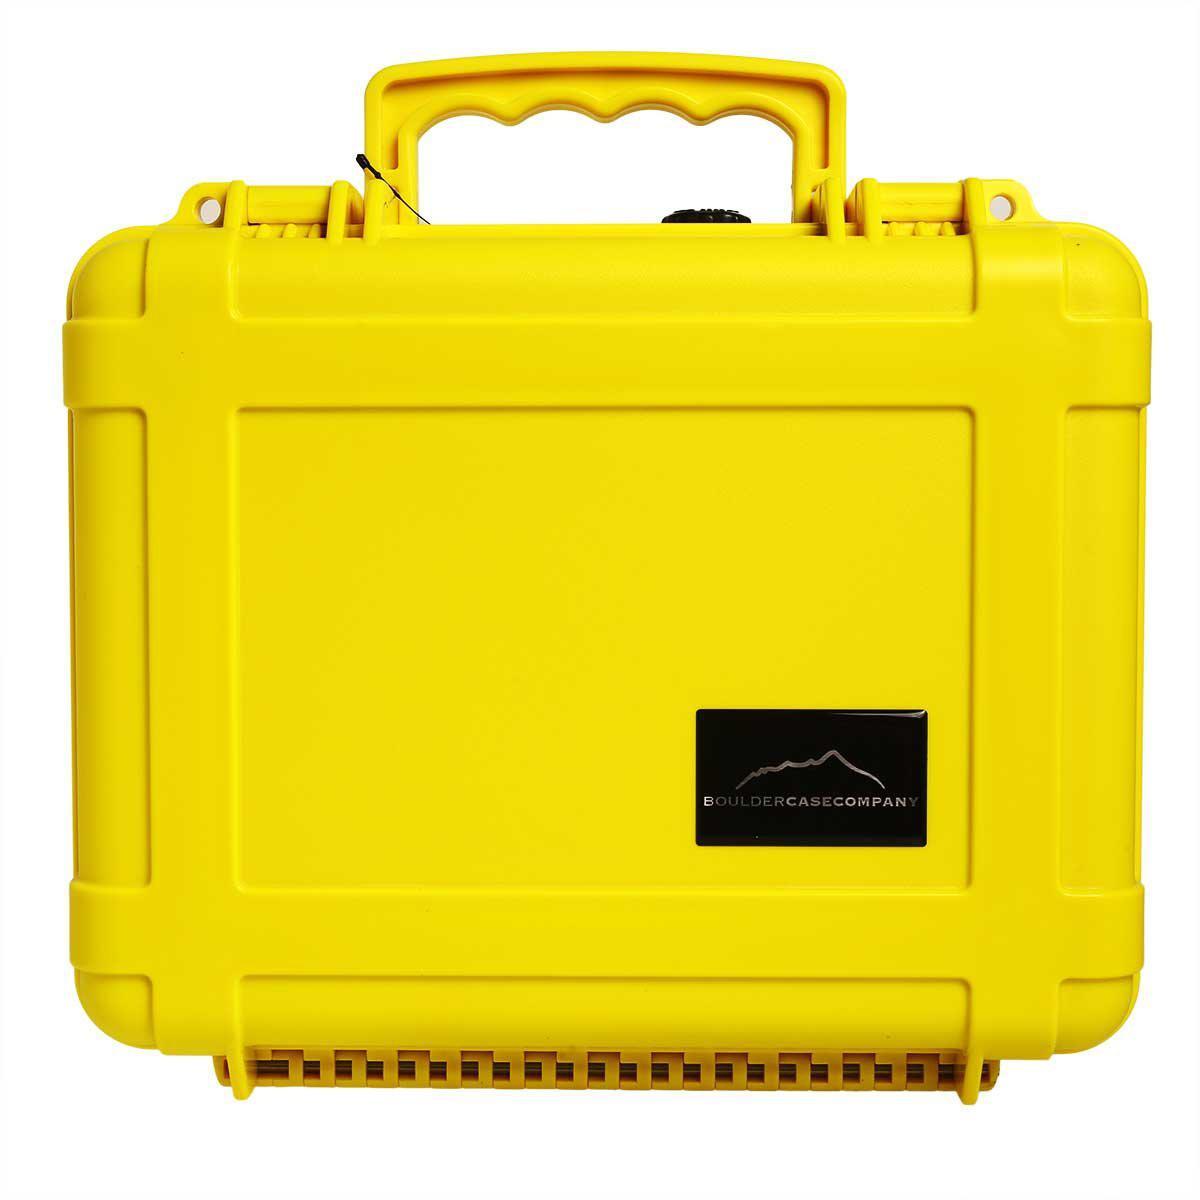 J6500-2 Case Yellow